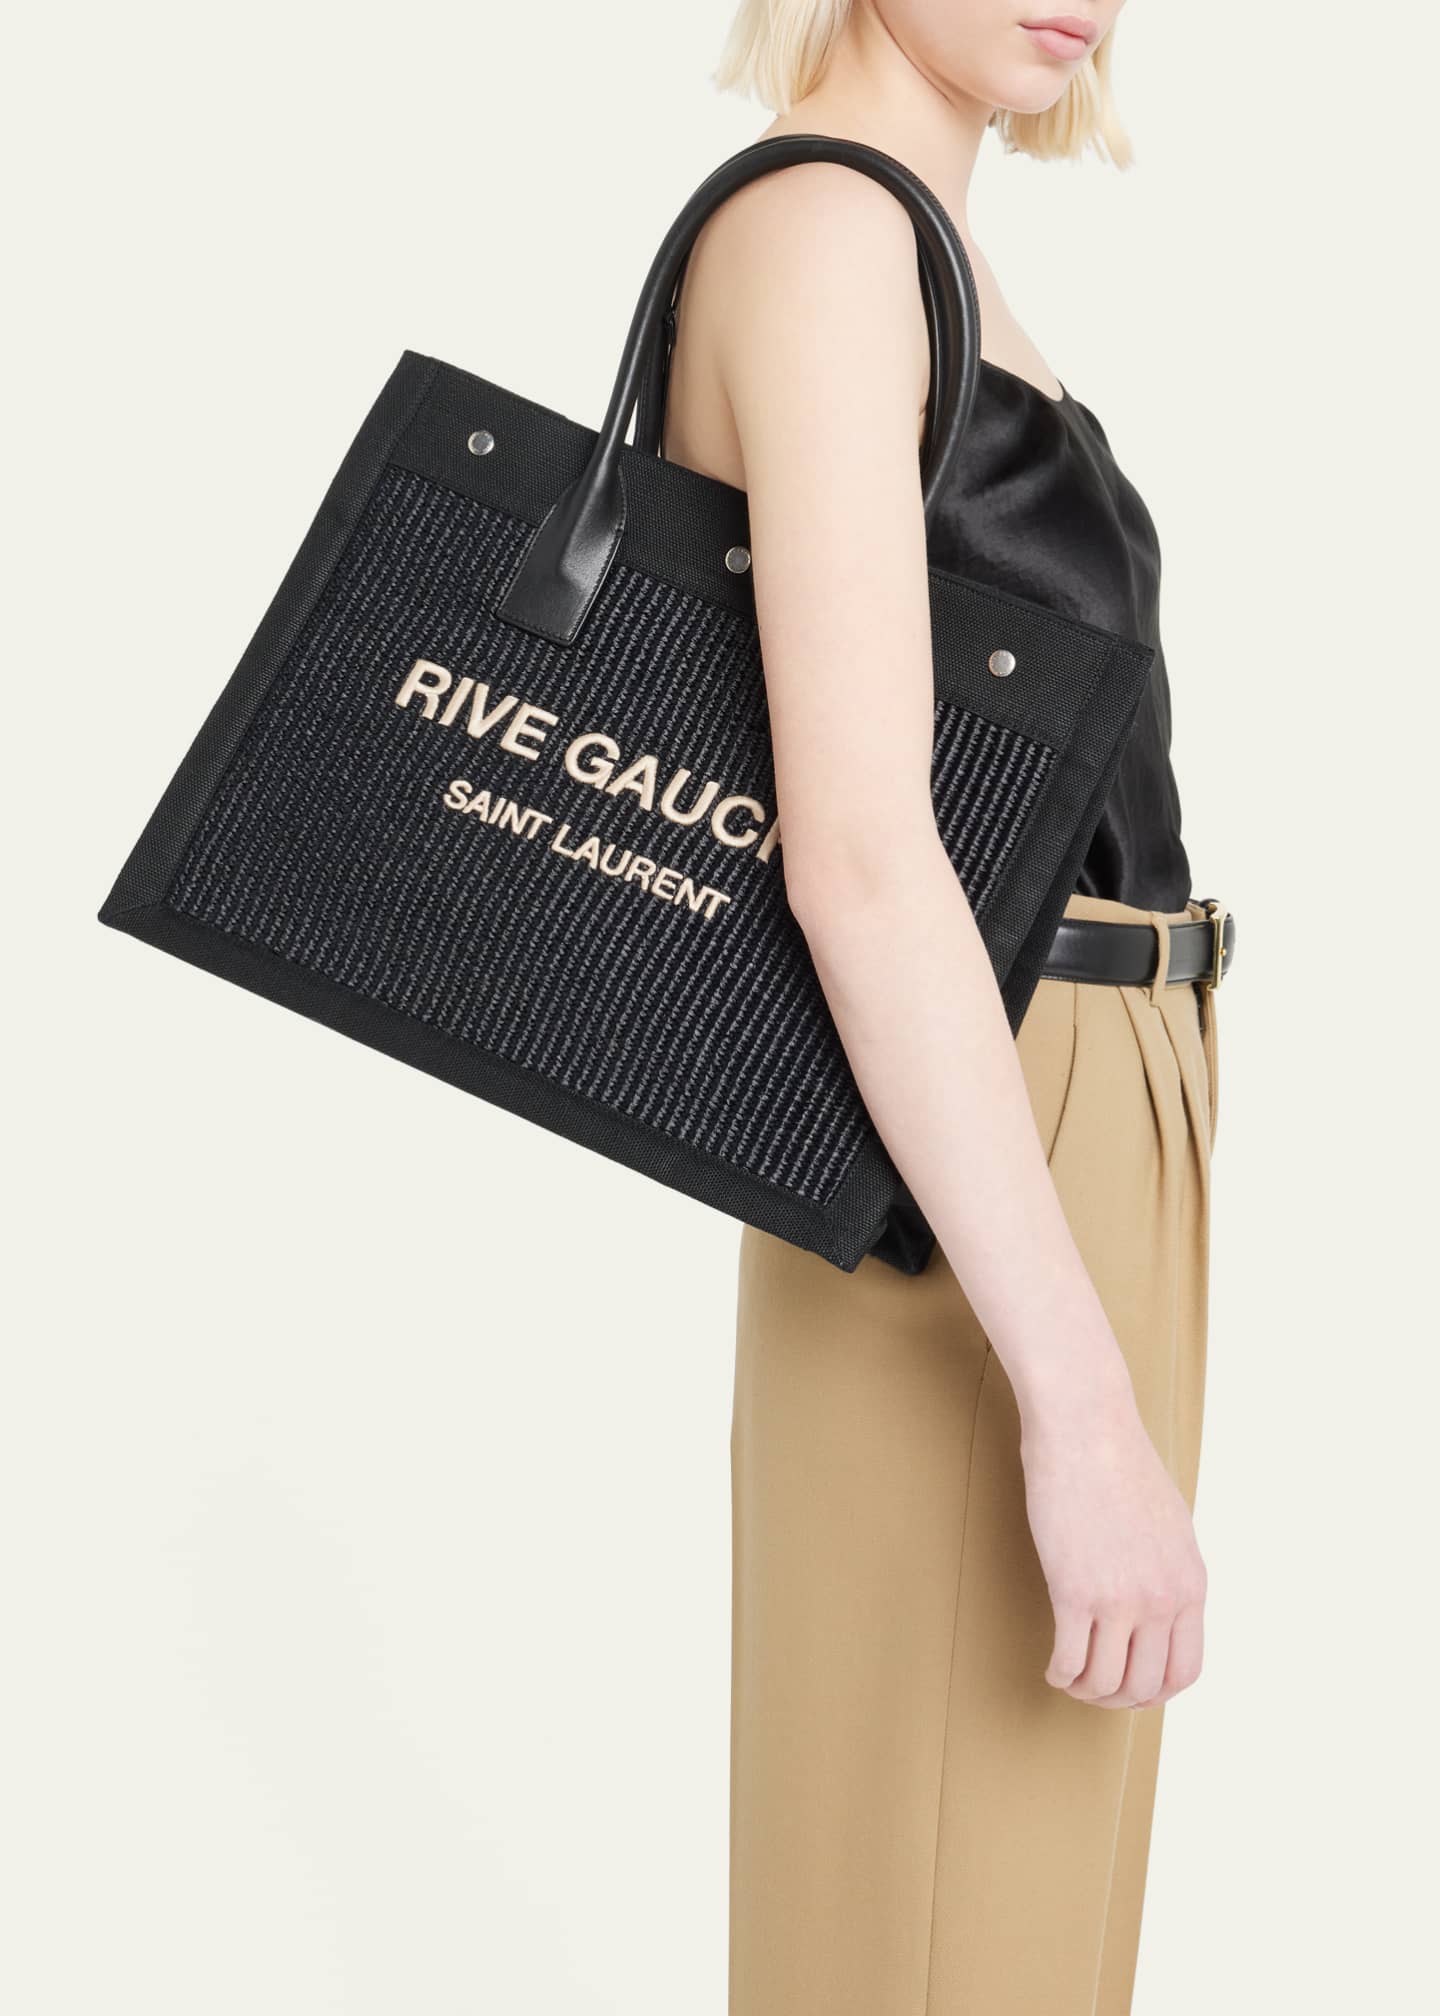 Rive gauche tote bag in raffia and leather